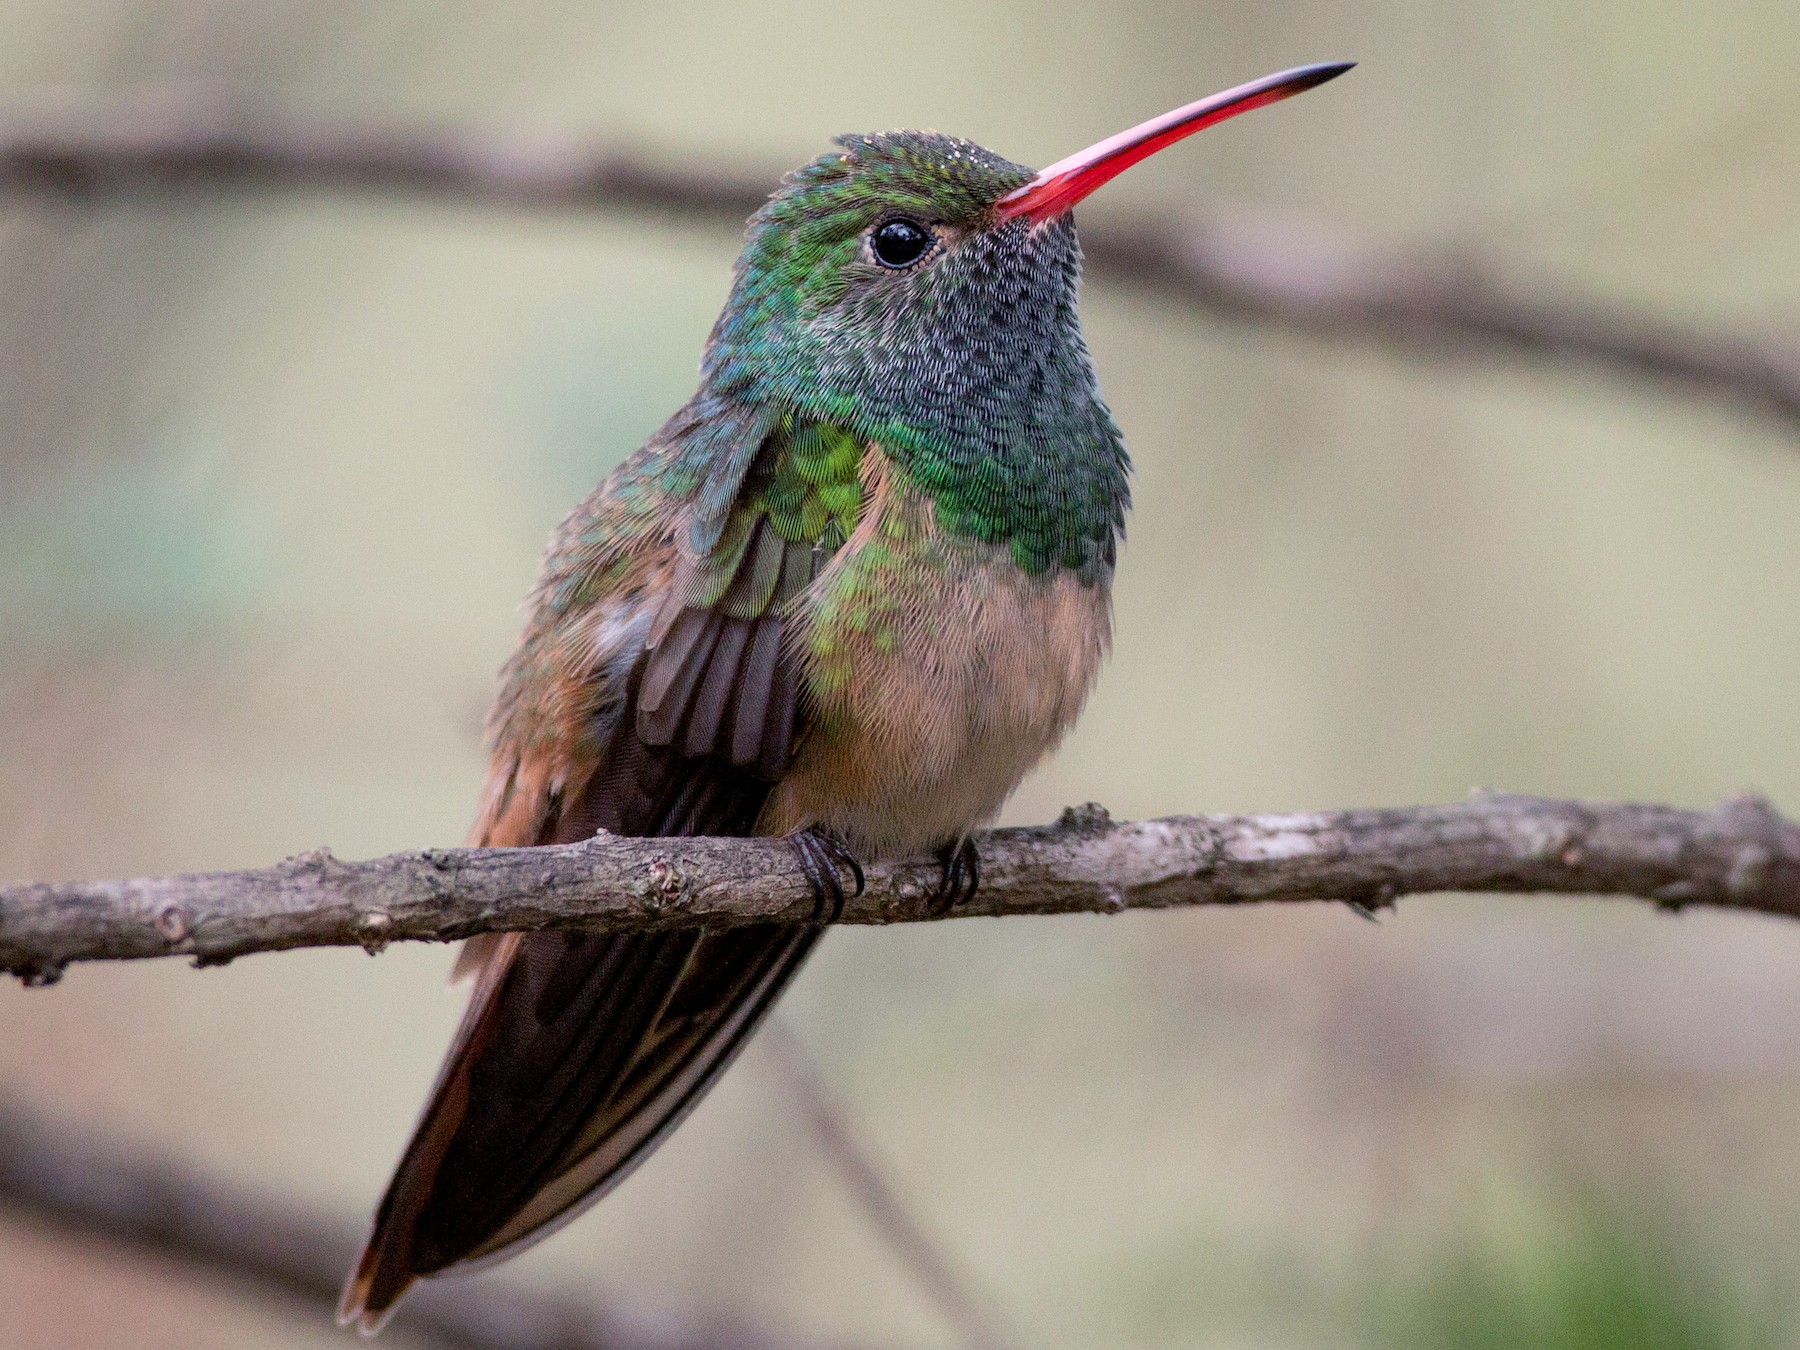 Buff-bellied Hummingbird - Ian Davies